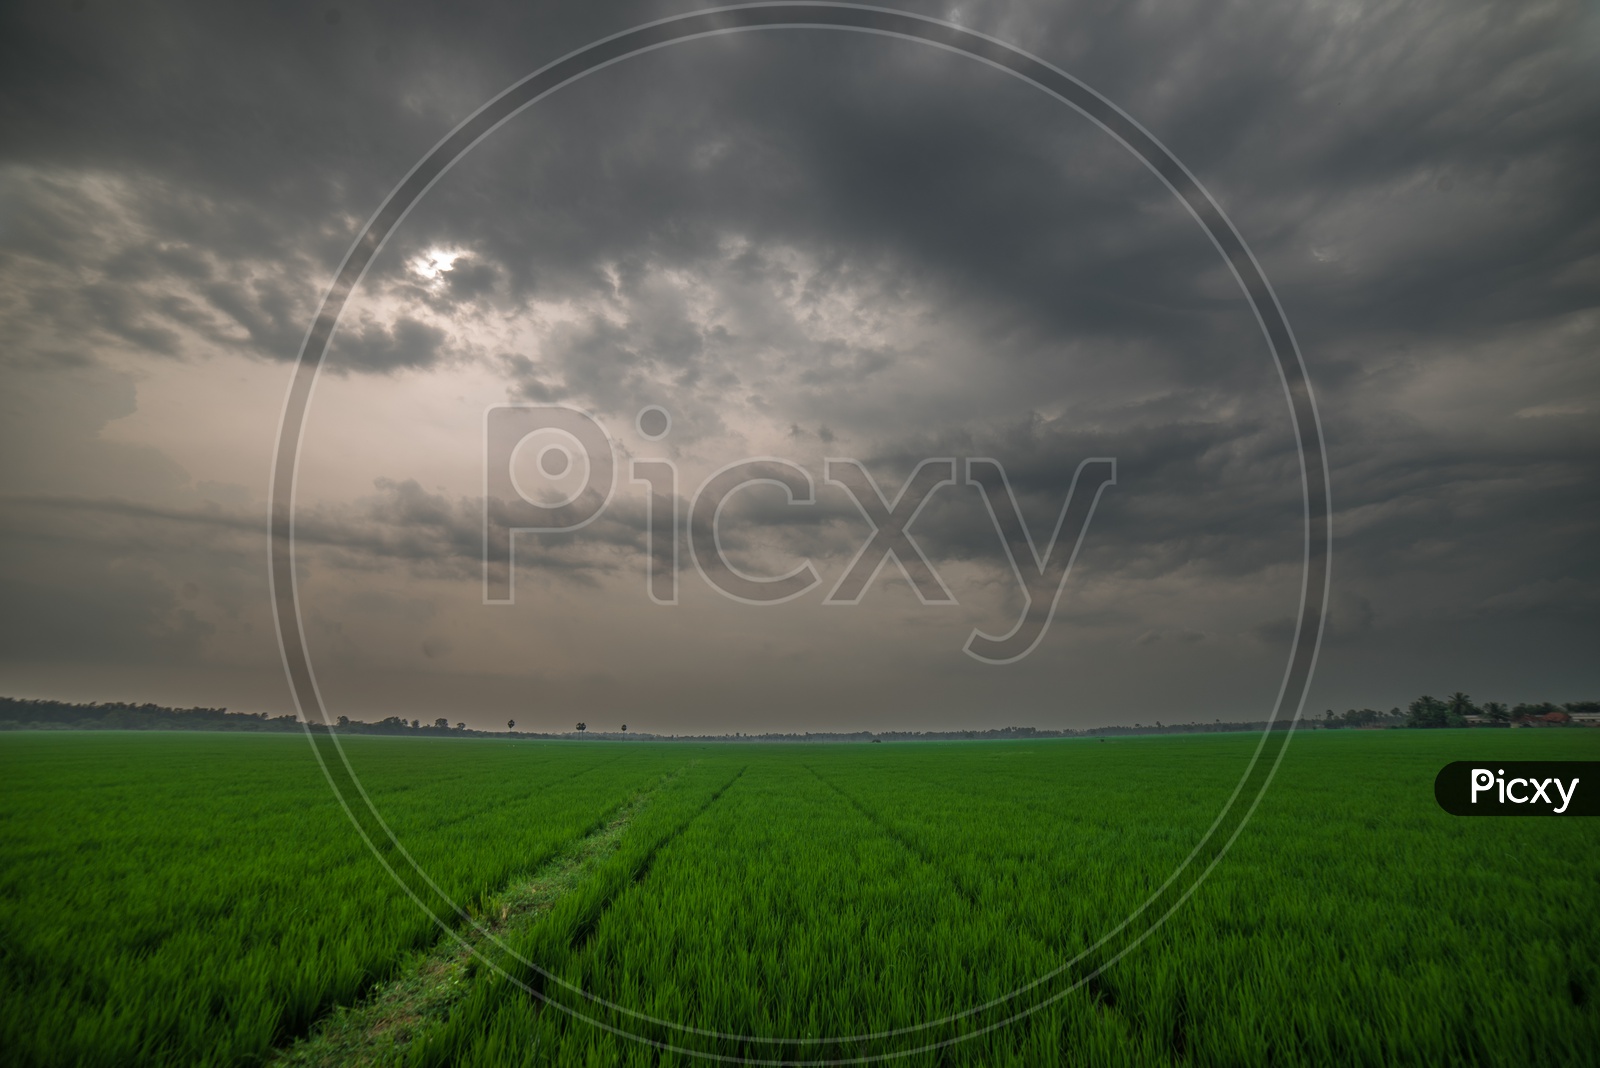 paddy fields